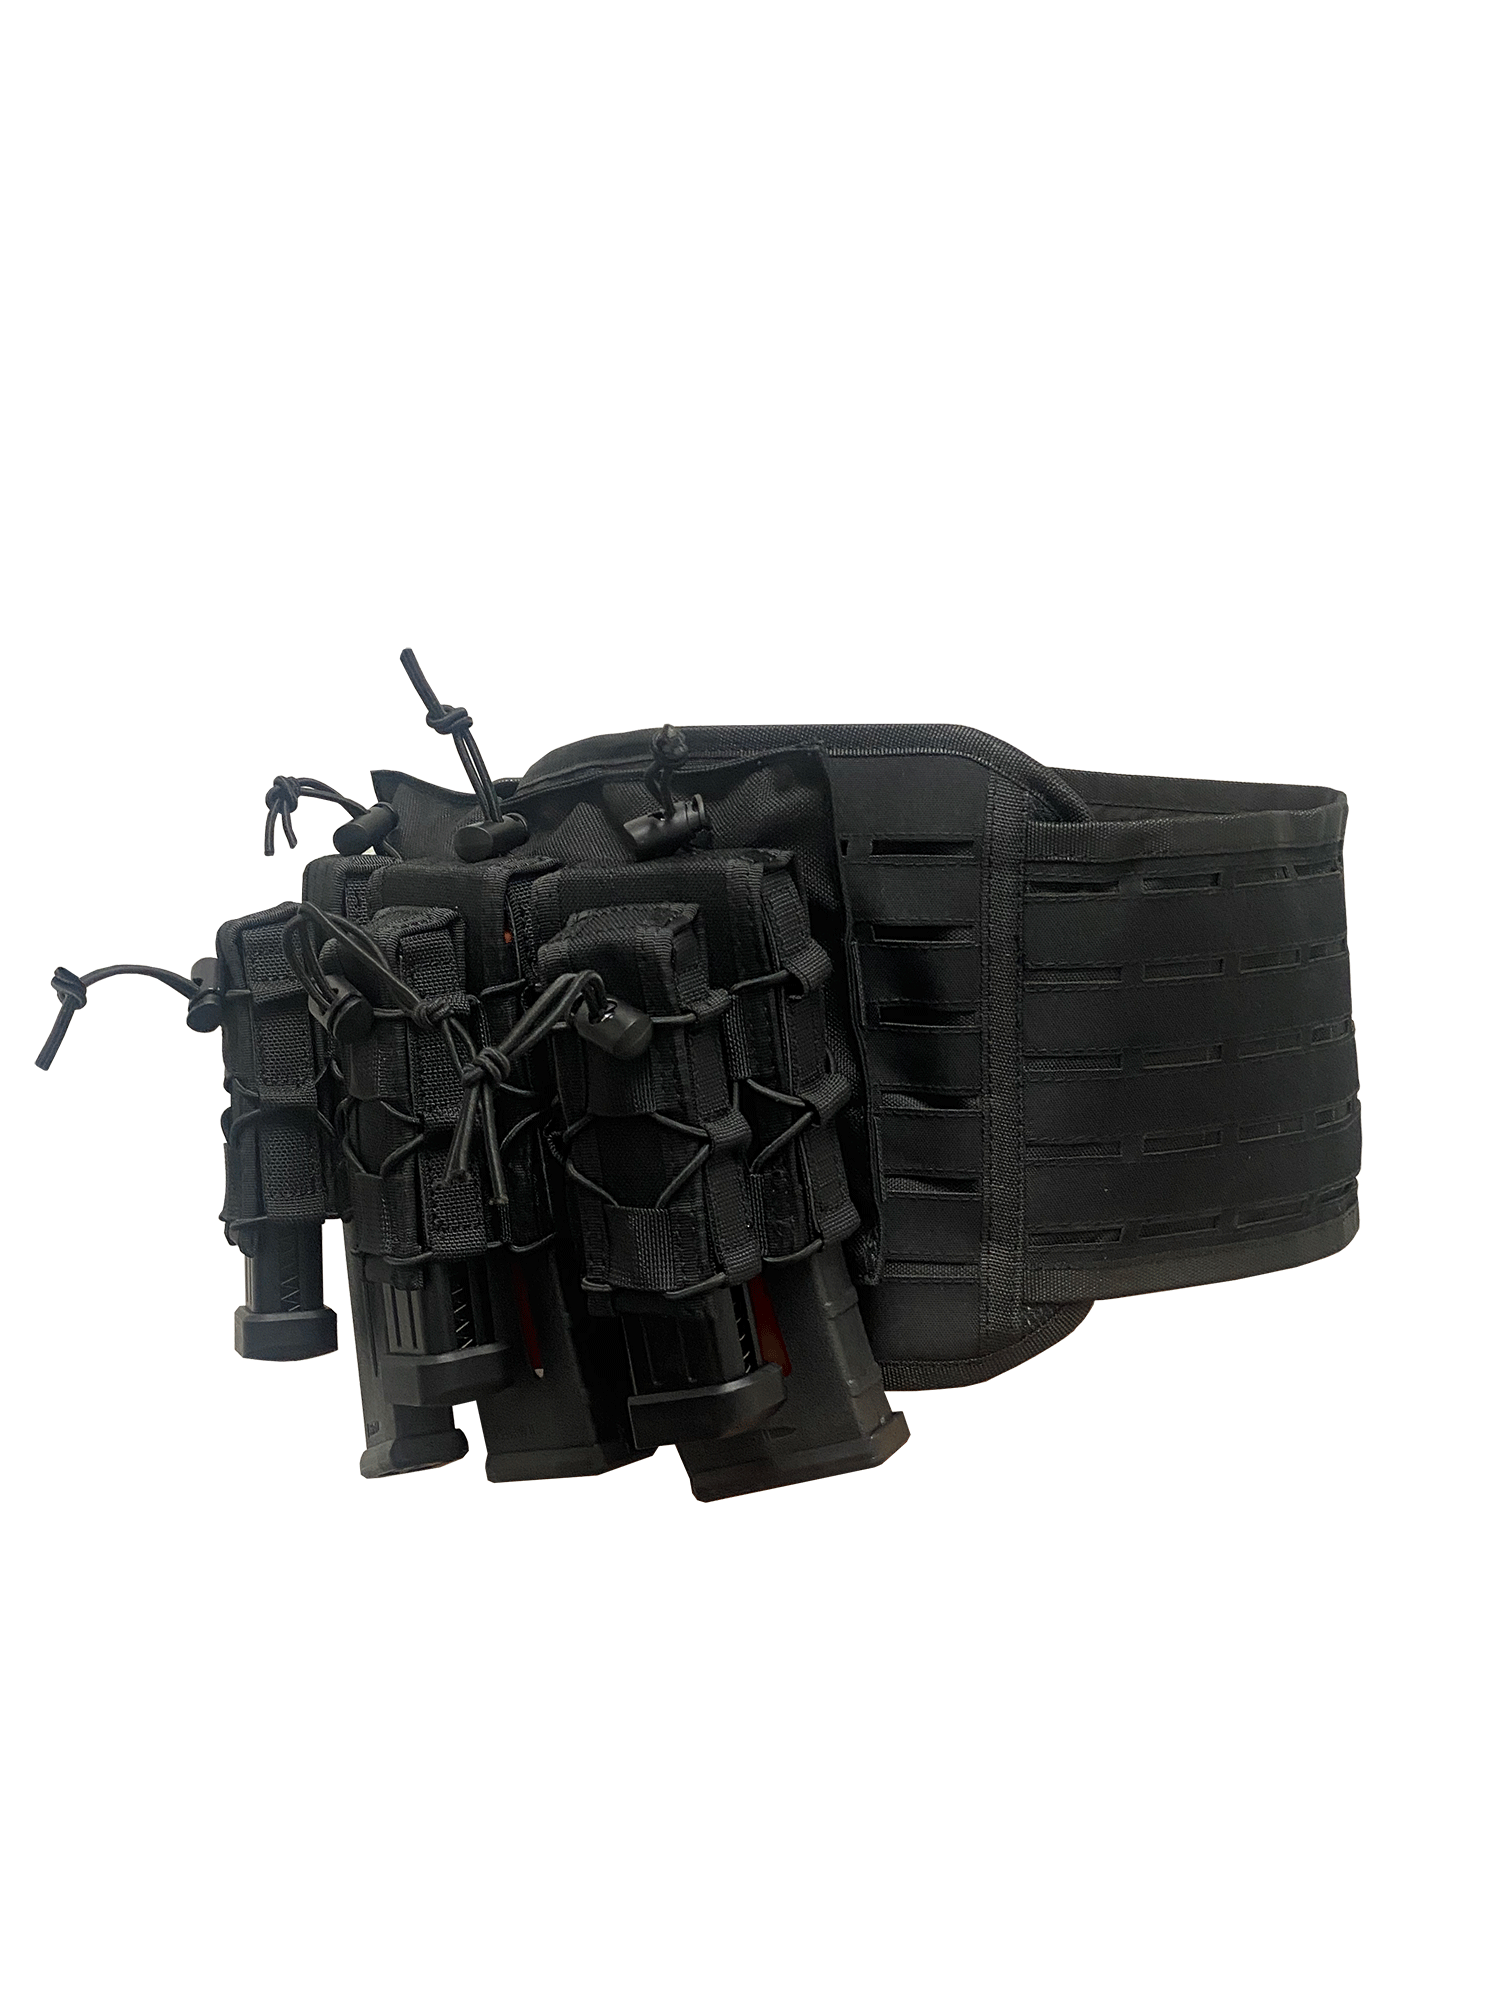 Gunfighter Airsoft Tac Pack - Sand